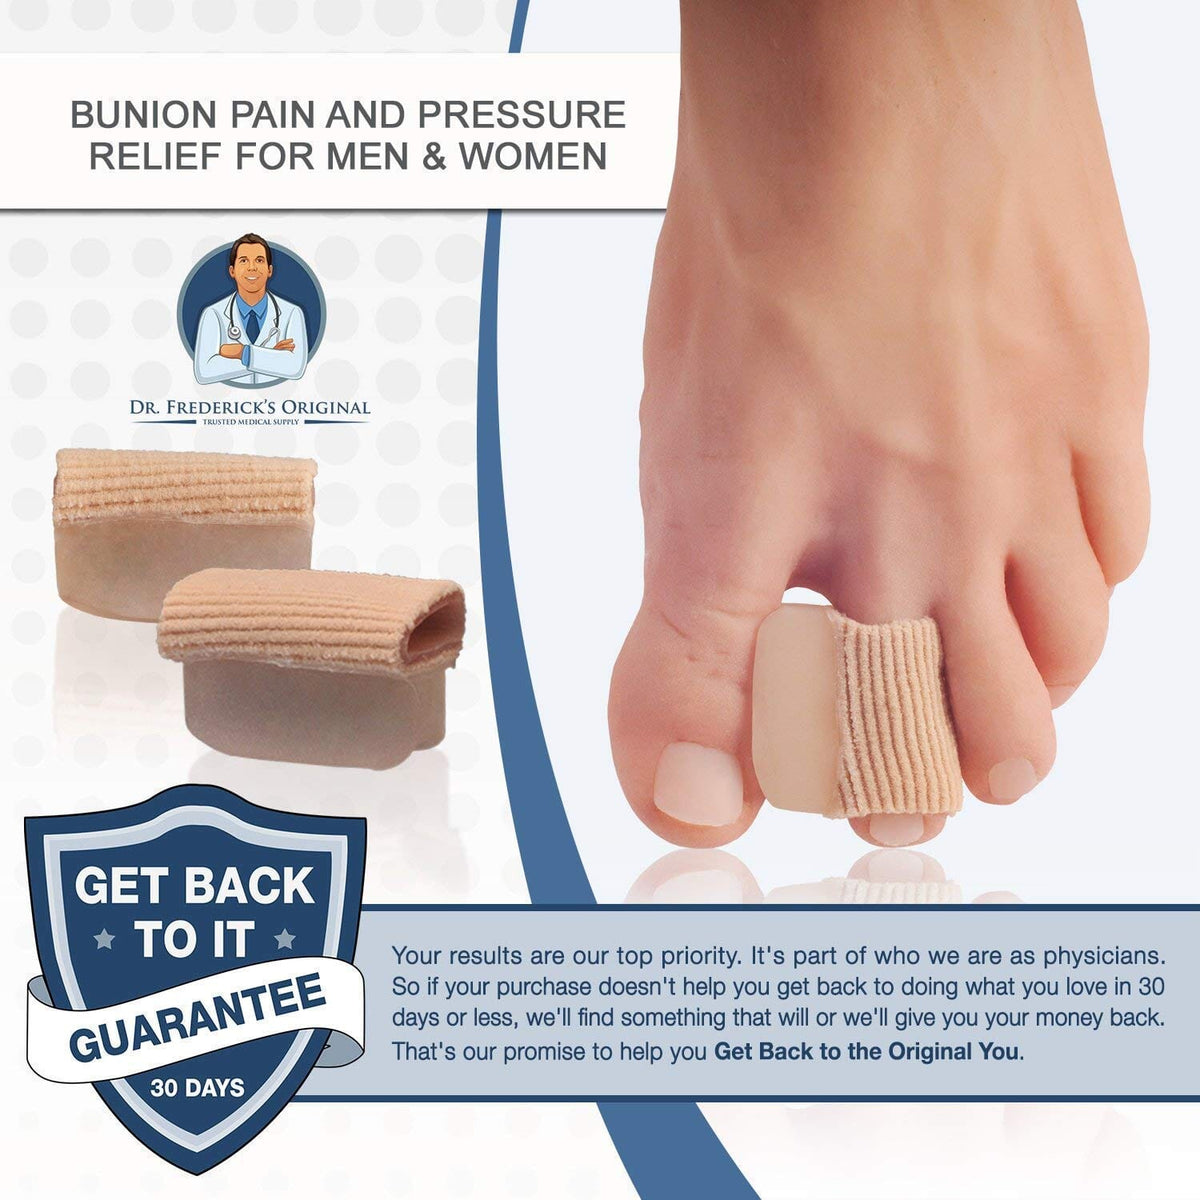 Dr. Frederick&#39;s Original 2 Piece Fabric Toe Separators - Bunion Relief Toe Spacer Set - 1 Pair Fabrigrip Toe Protectors - For Men &amp; Women Foot Pain Dr. Frederick&#39;s Original 